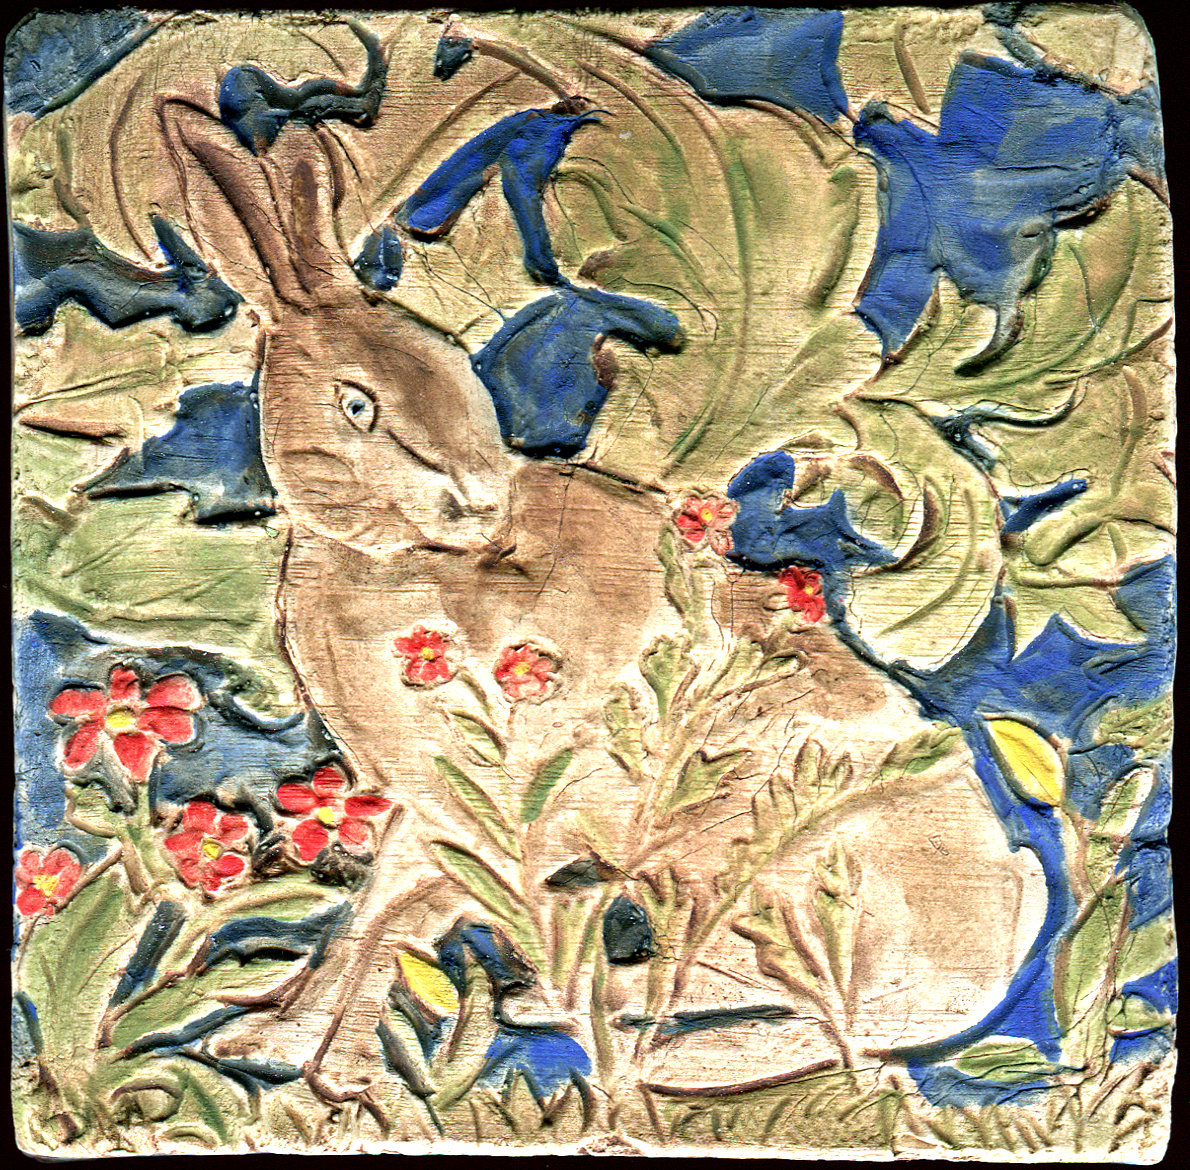 Beautiful Art and Crafts William Morris Rabbit Hare Peacock Bird Fox Vixen Black Forest design 8/20cm ceramic tile for kitchens bathrooms splash backs fireplace surrounds murals and mosaics